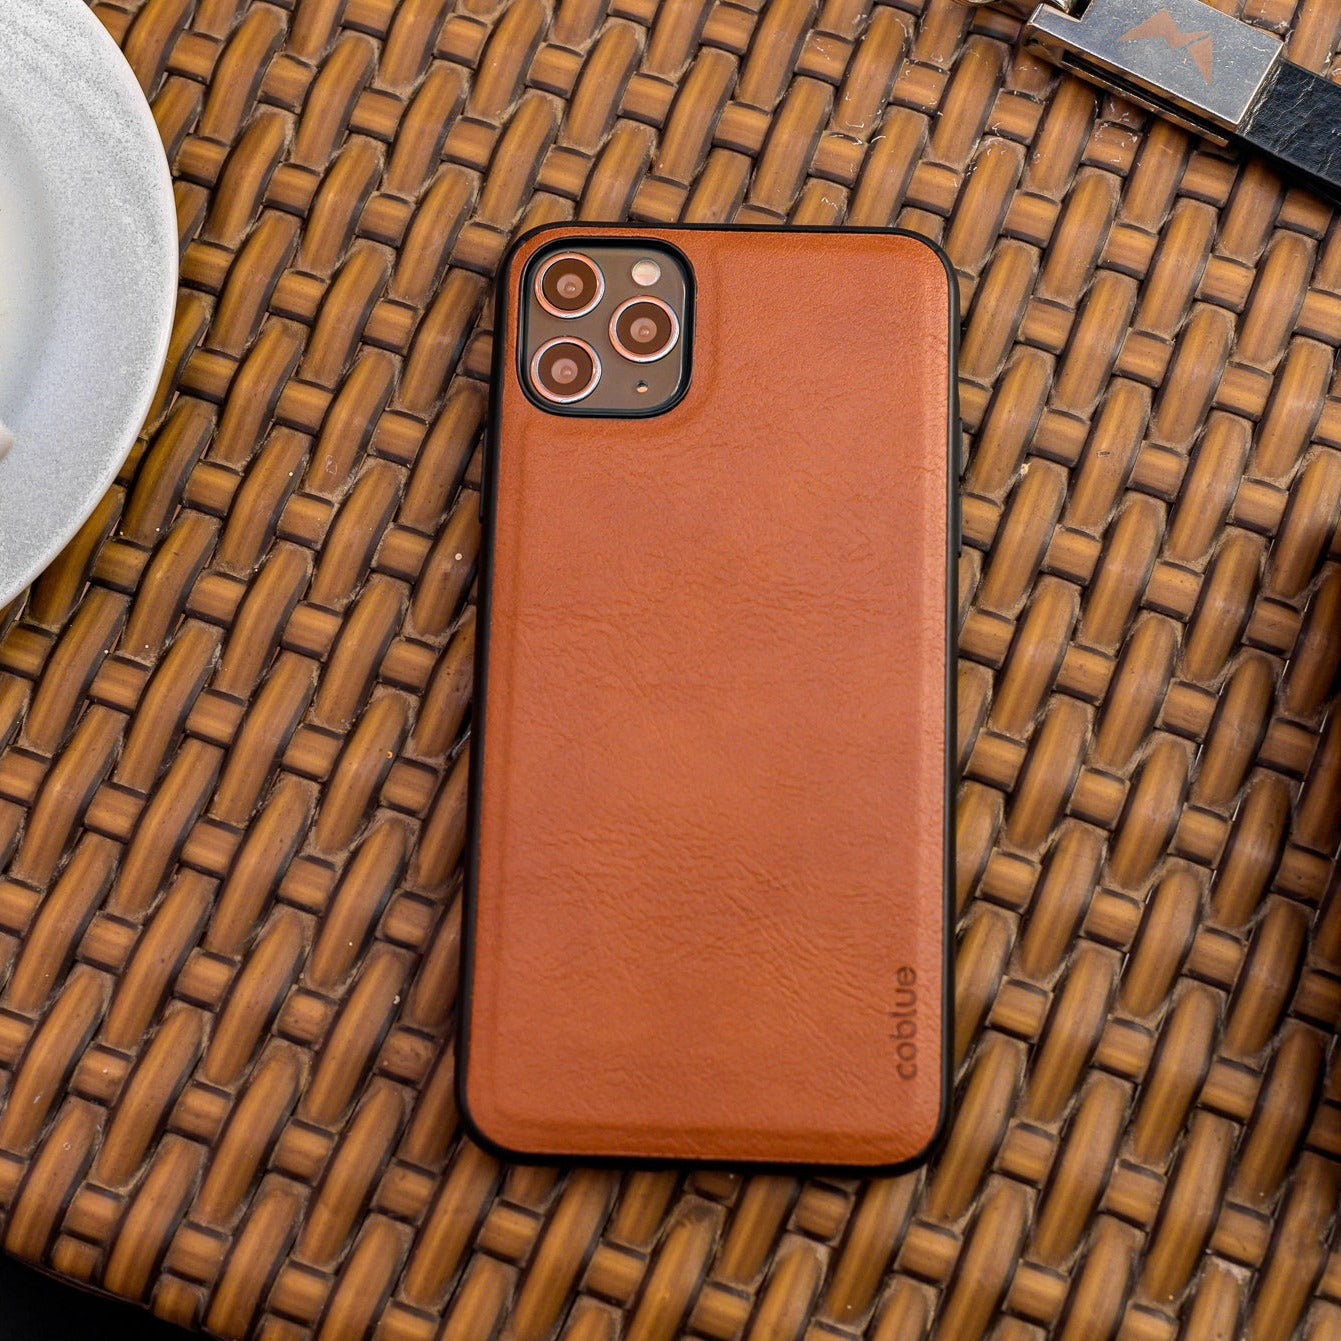 Coblue Leather Case iPhone 11 Pro Max Three store